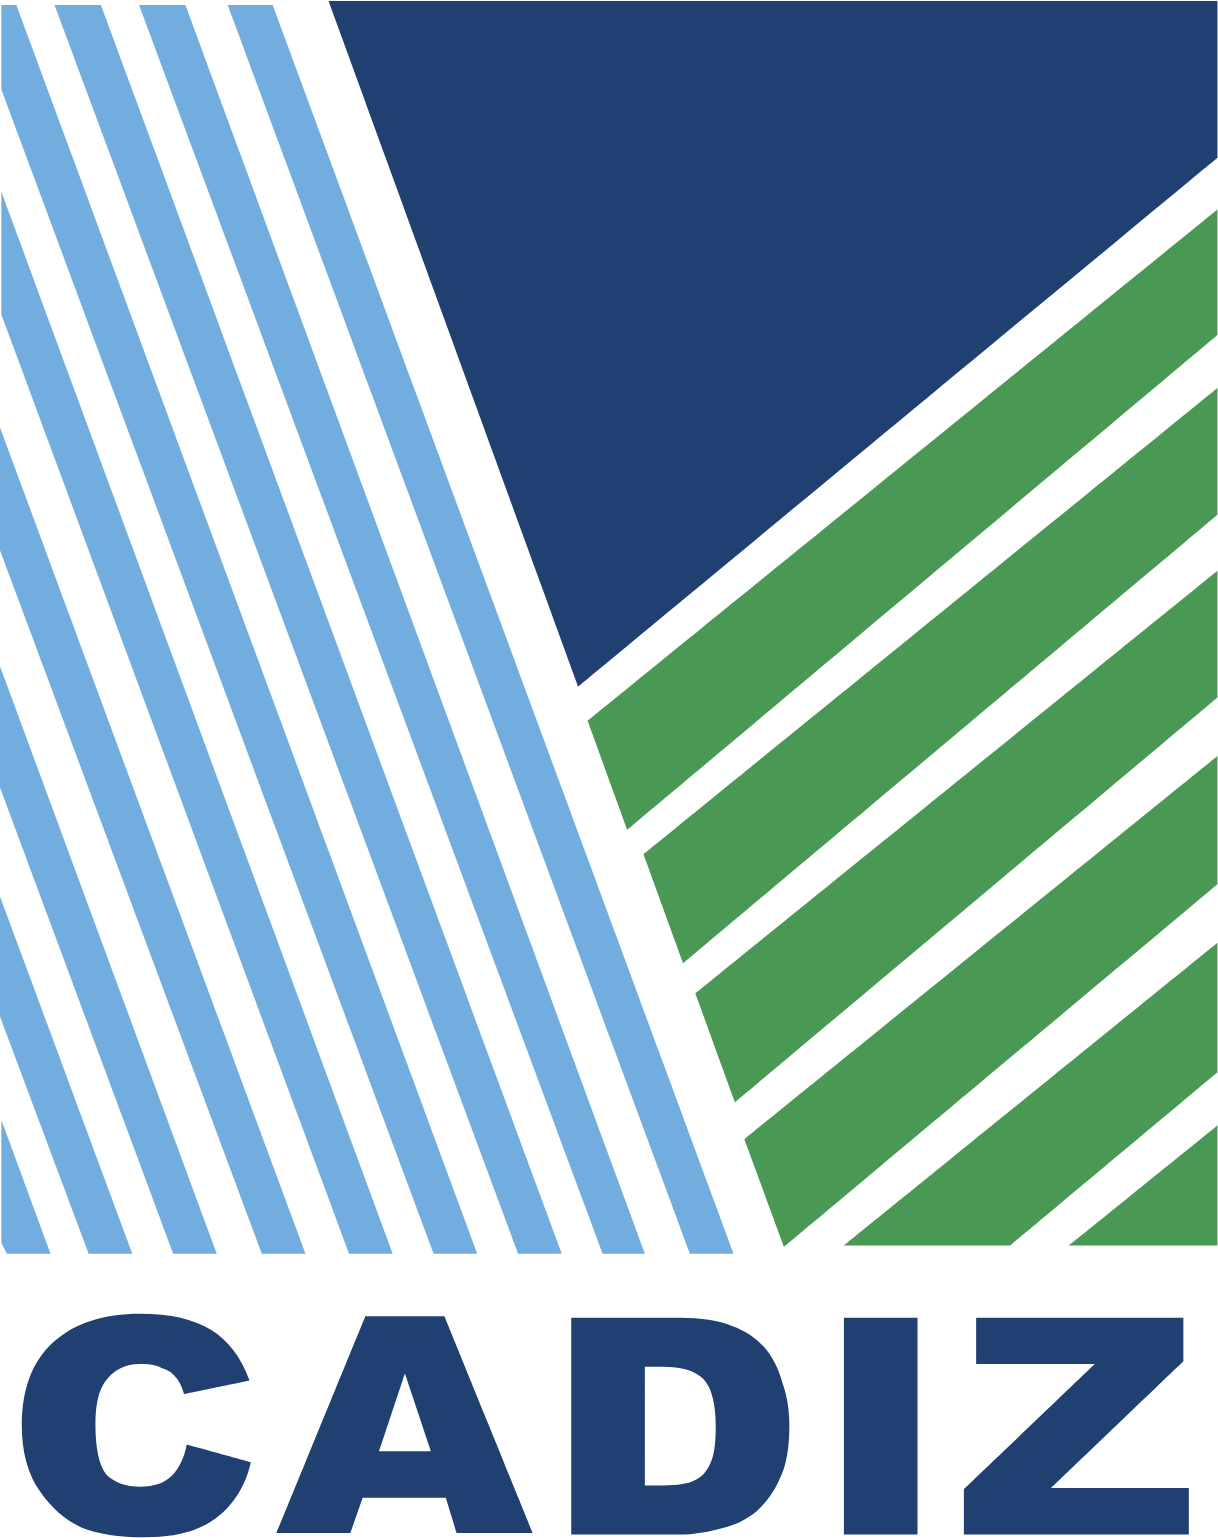 Cadiz logo large (transparent PNG)